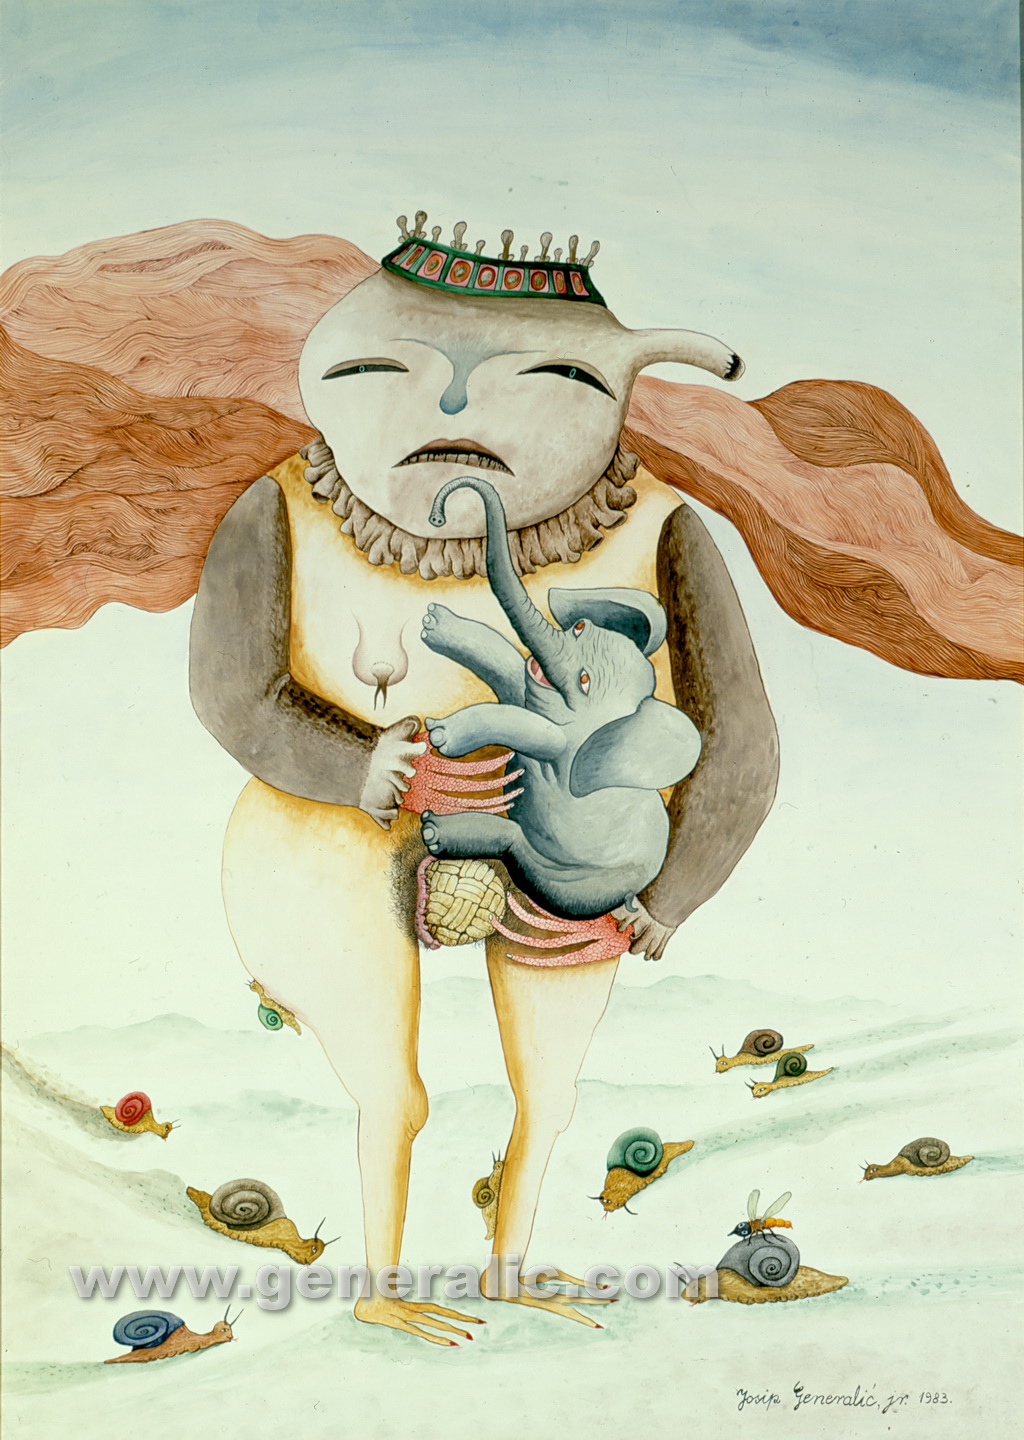 Josip Generalic, 1983, Monster with elephant, watercolour